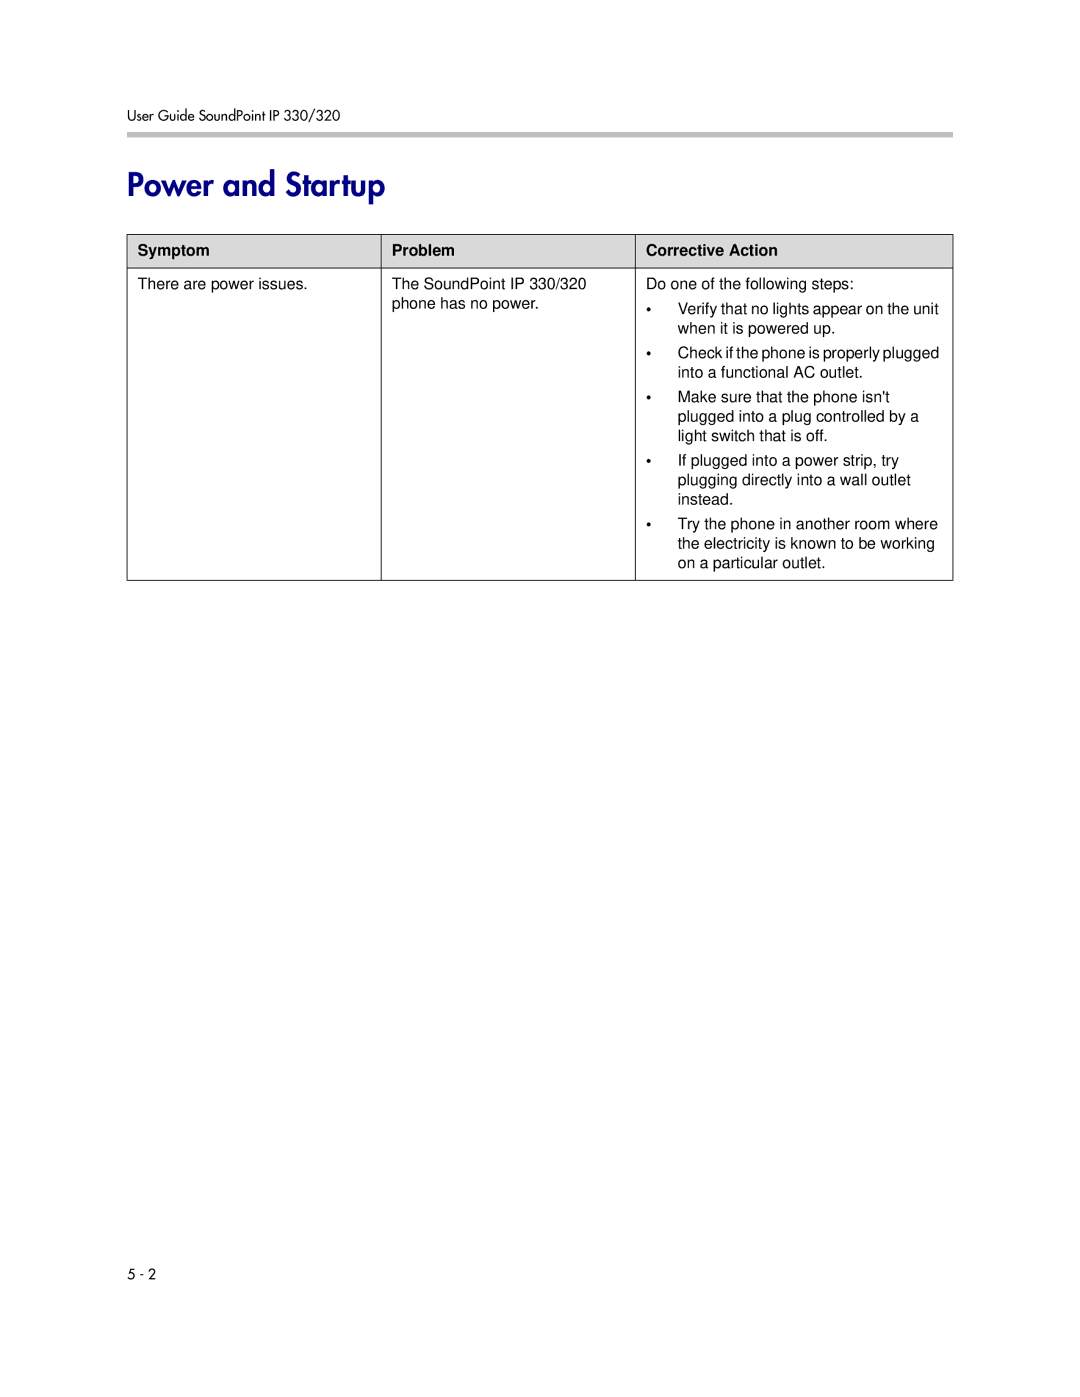 Polycom 330, 320 manual Power and Startup, Symptom Problem Corrective Action 